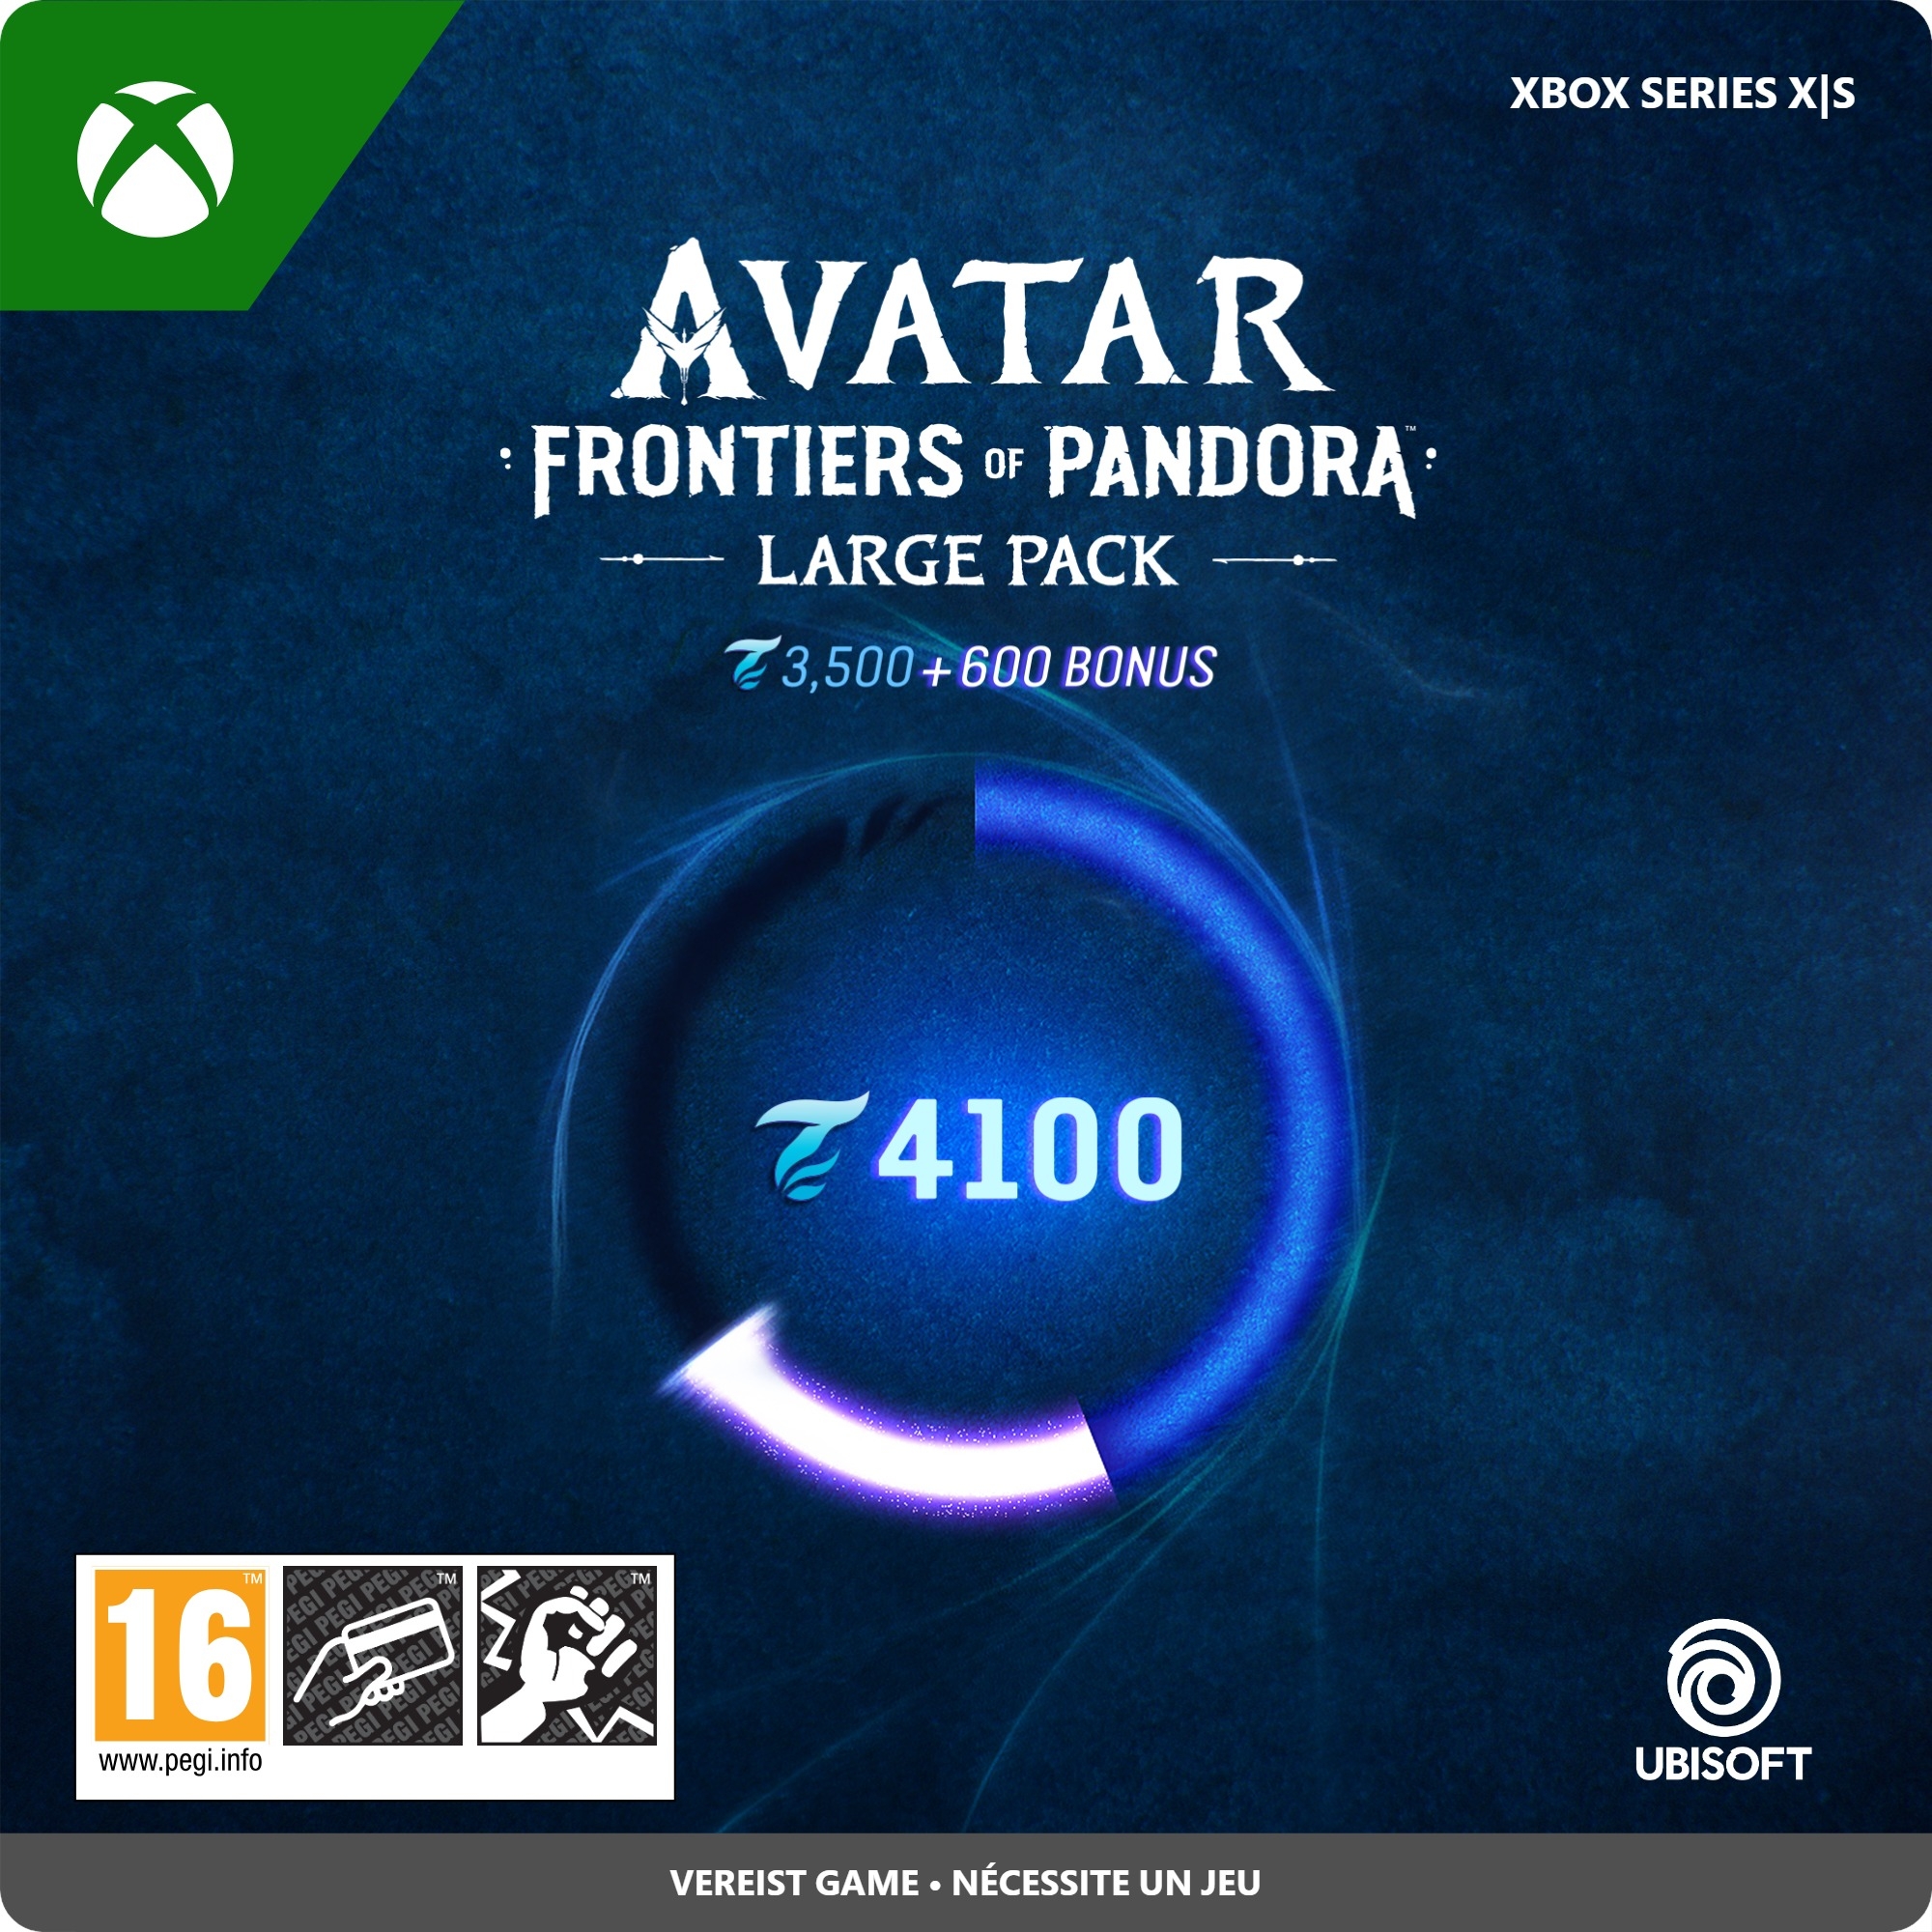 4.100 Xbox Avatar: Frontiers of Pandora Large Pack Tokens (direct digitaal geleverd)